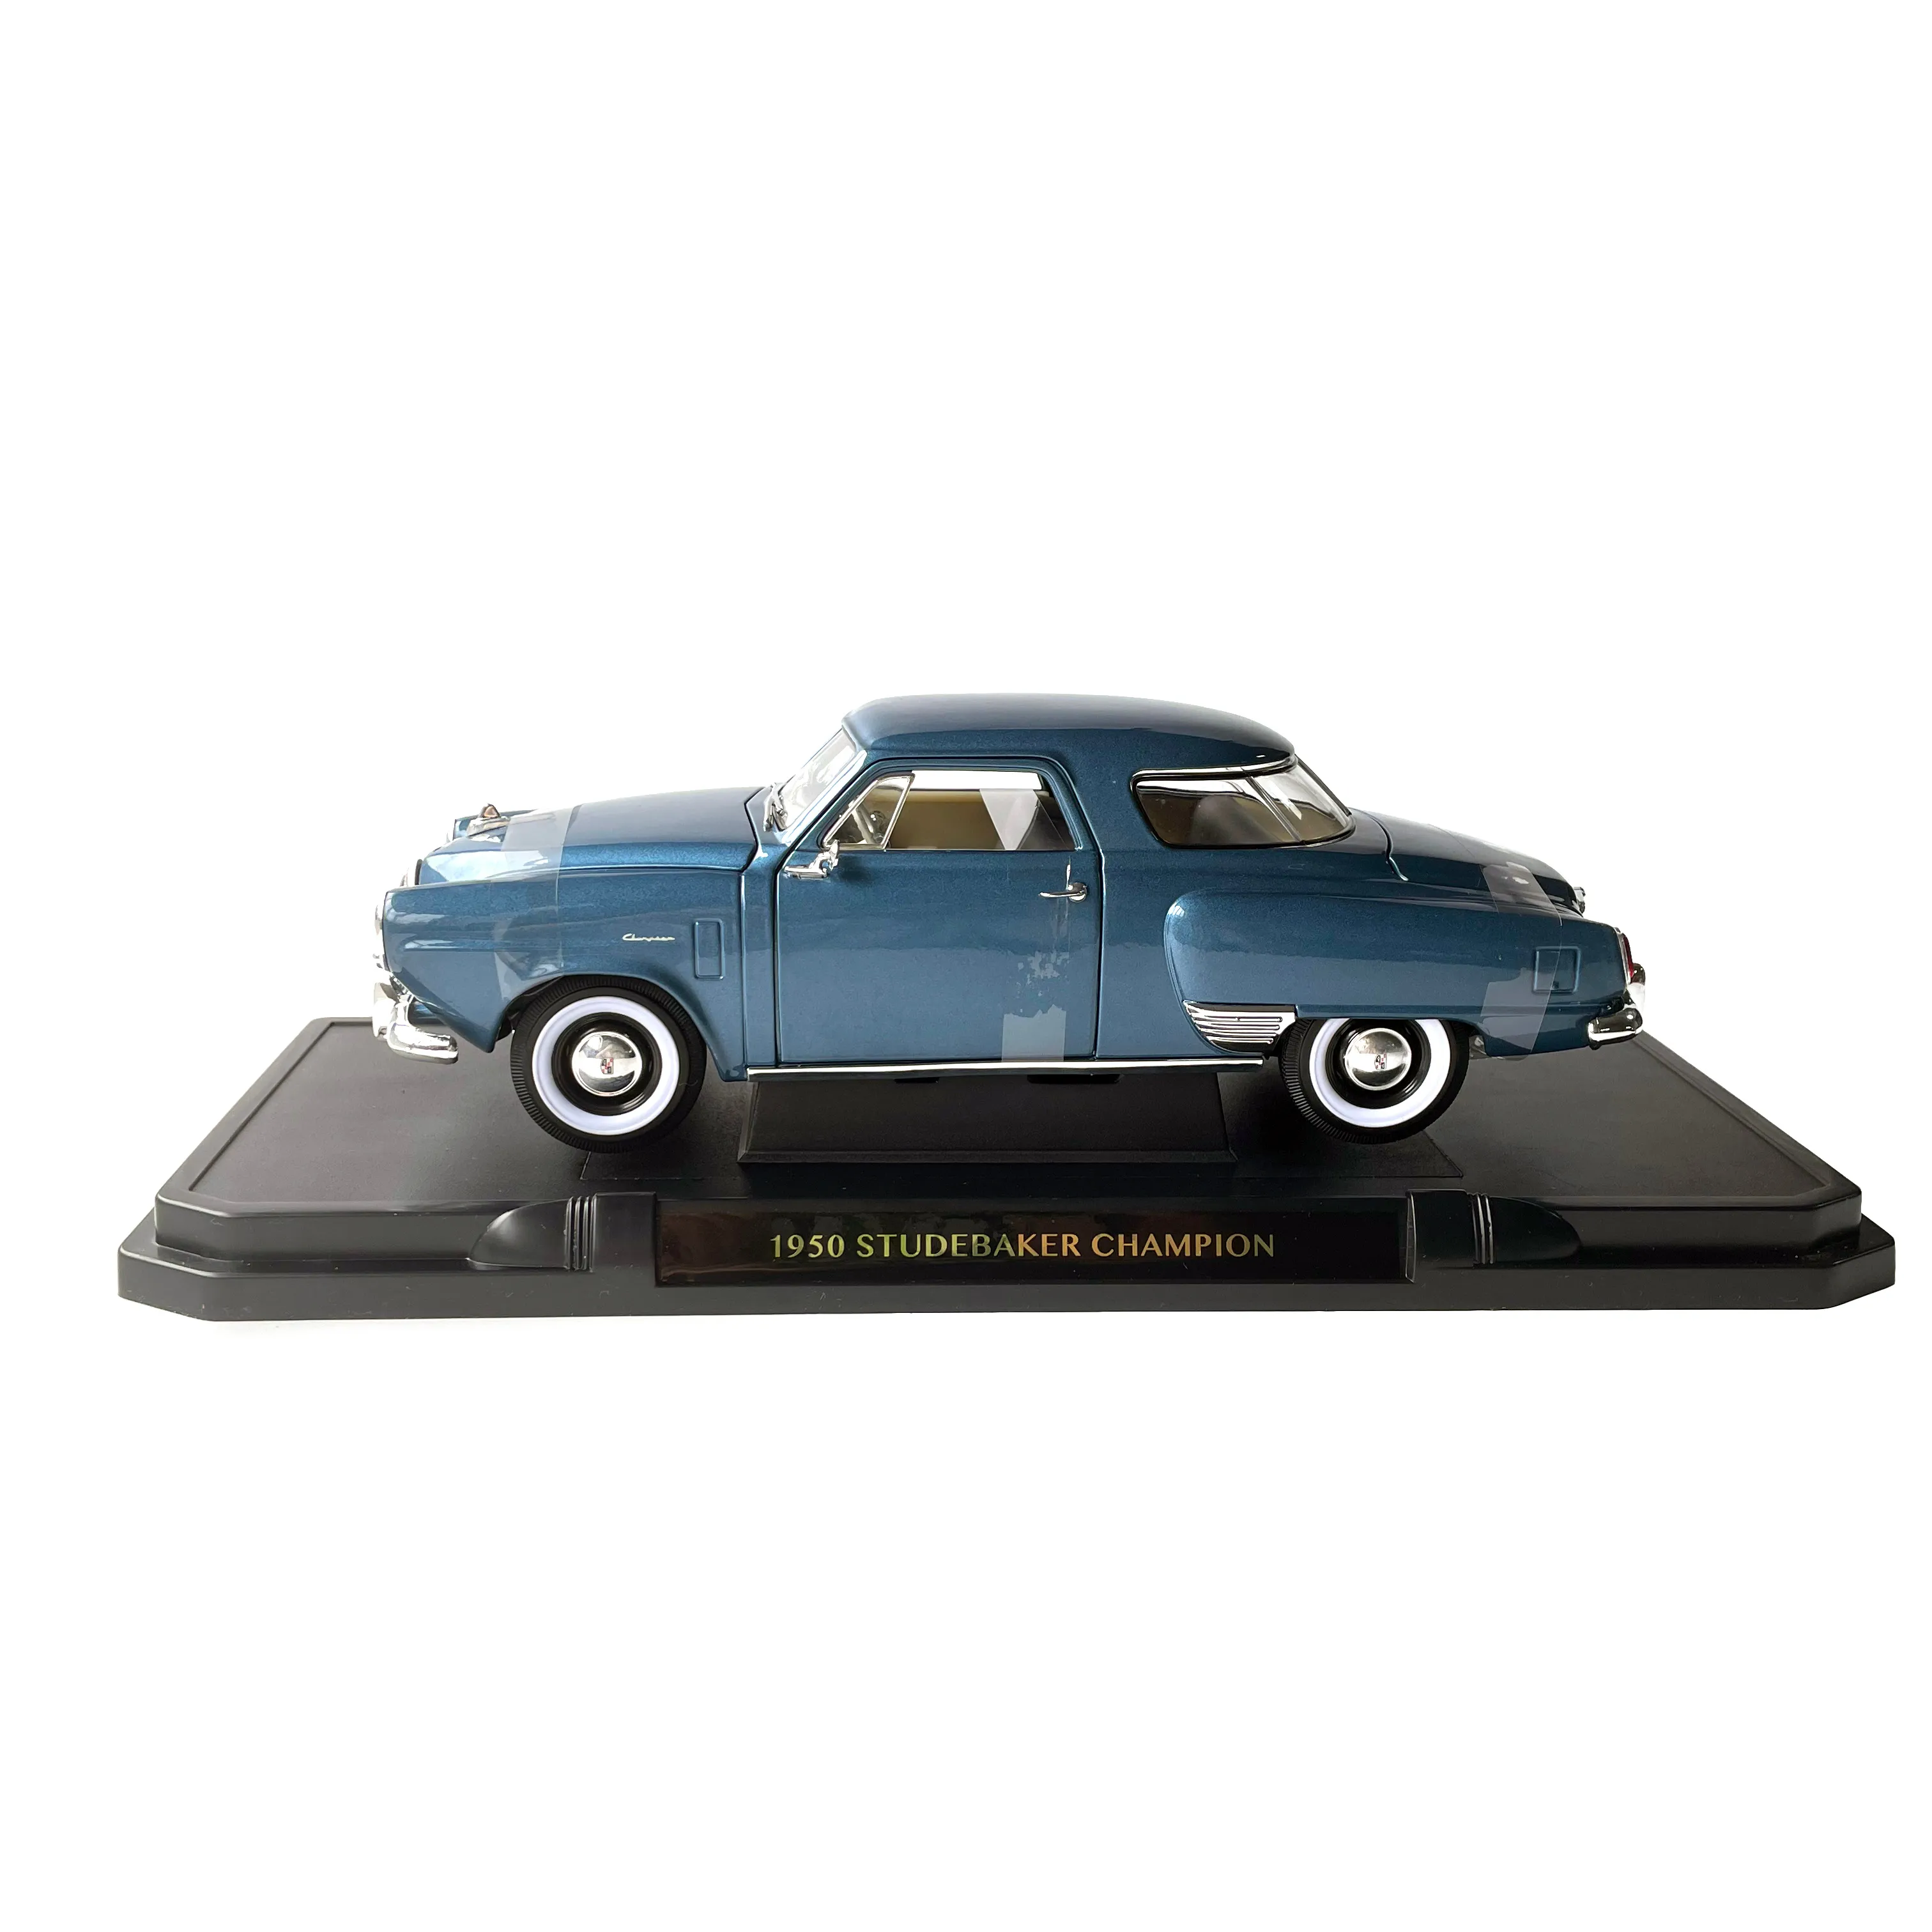 Kualitas tinggi Die cast Zinc Alloy mobil model 1/18 skala 1950 Studebaker Champion Vintage Model mobil dengan stok.